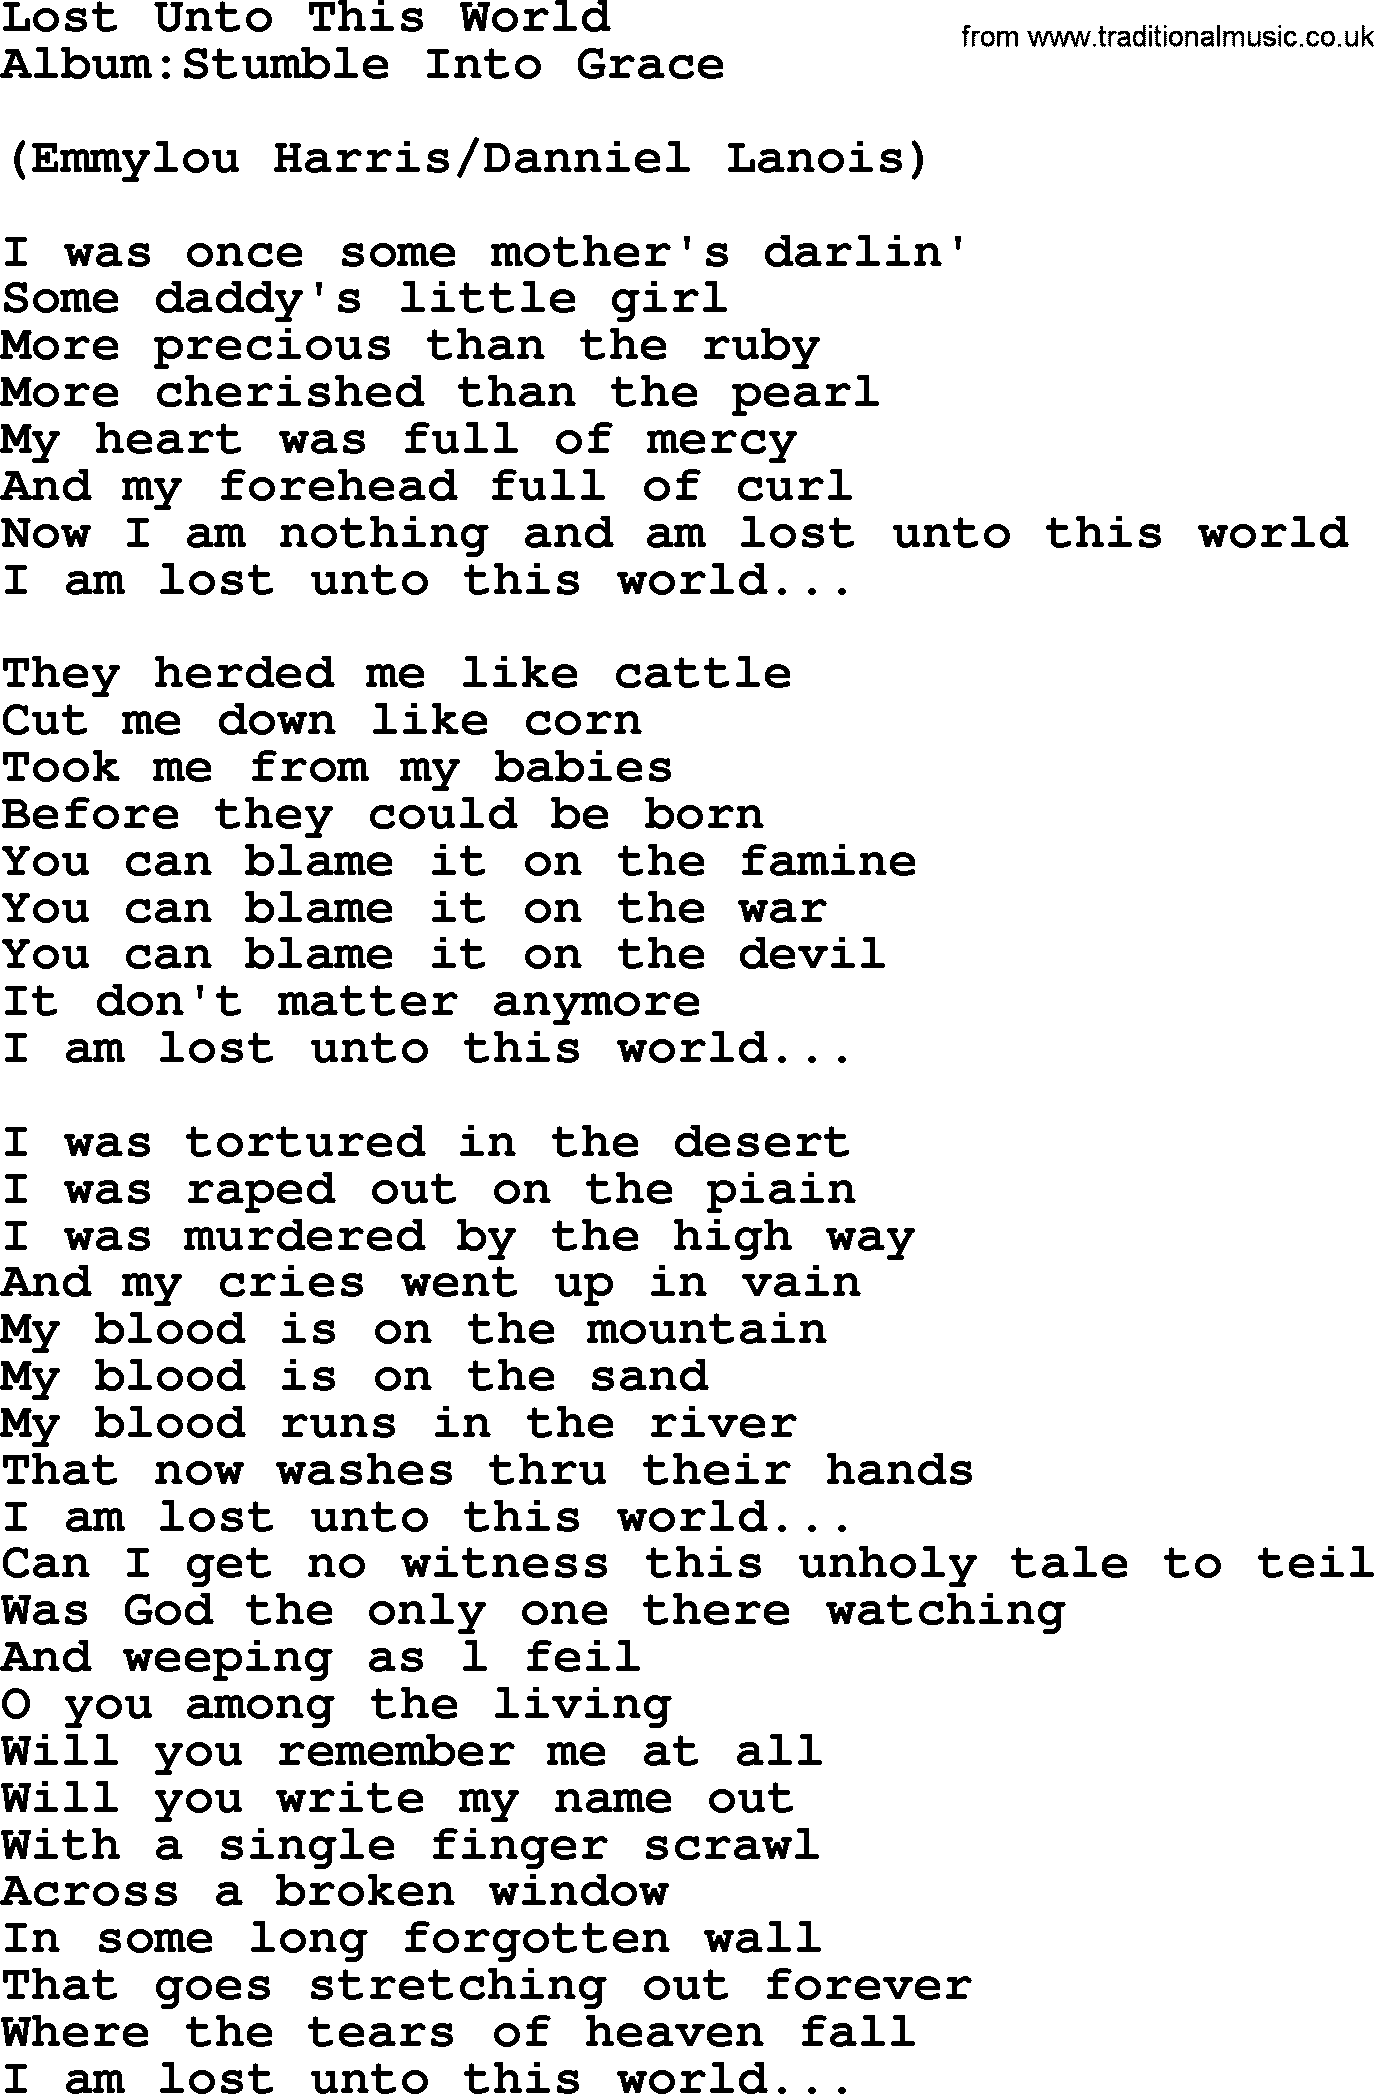 Emmylou Harris song: Lost Unto This World lyrics